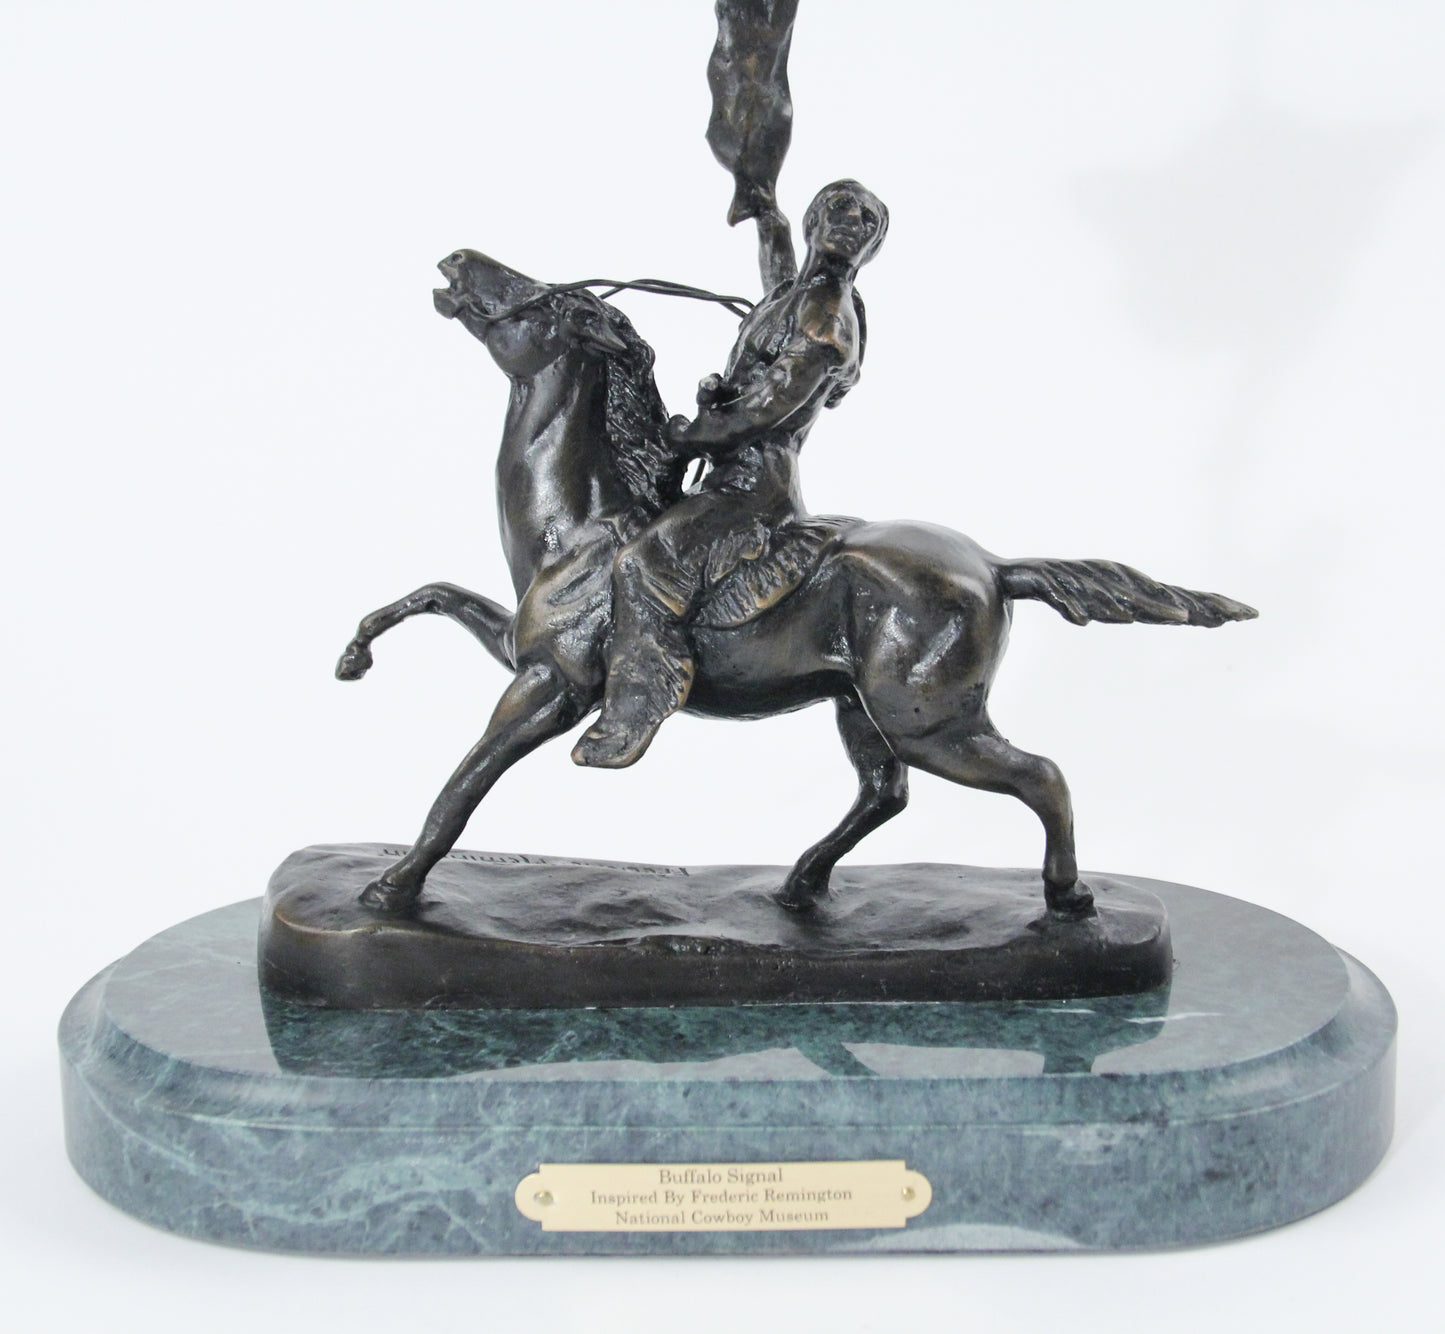 Buffalo Signal by Frederic Remington bronze sculpture statue large detail